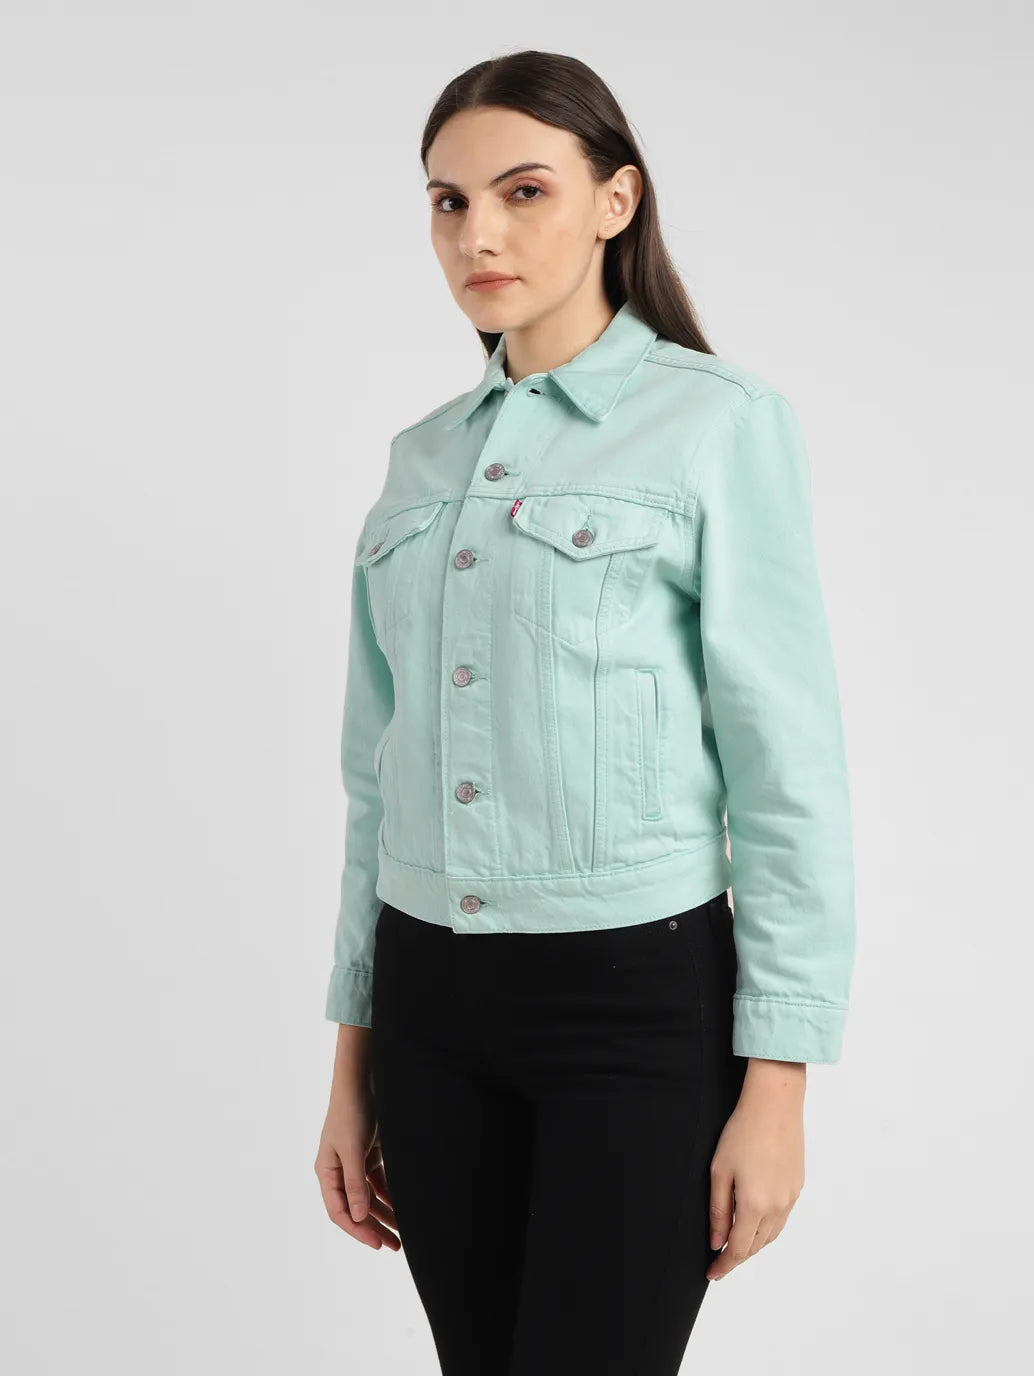 Women's Solid Green Spread Collar Jacket